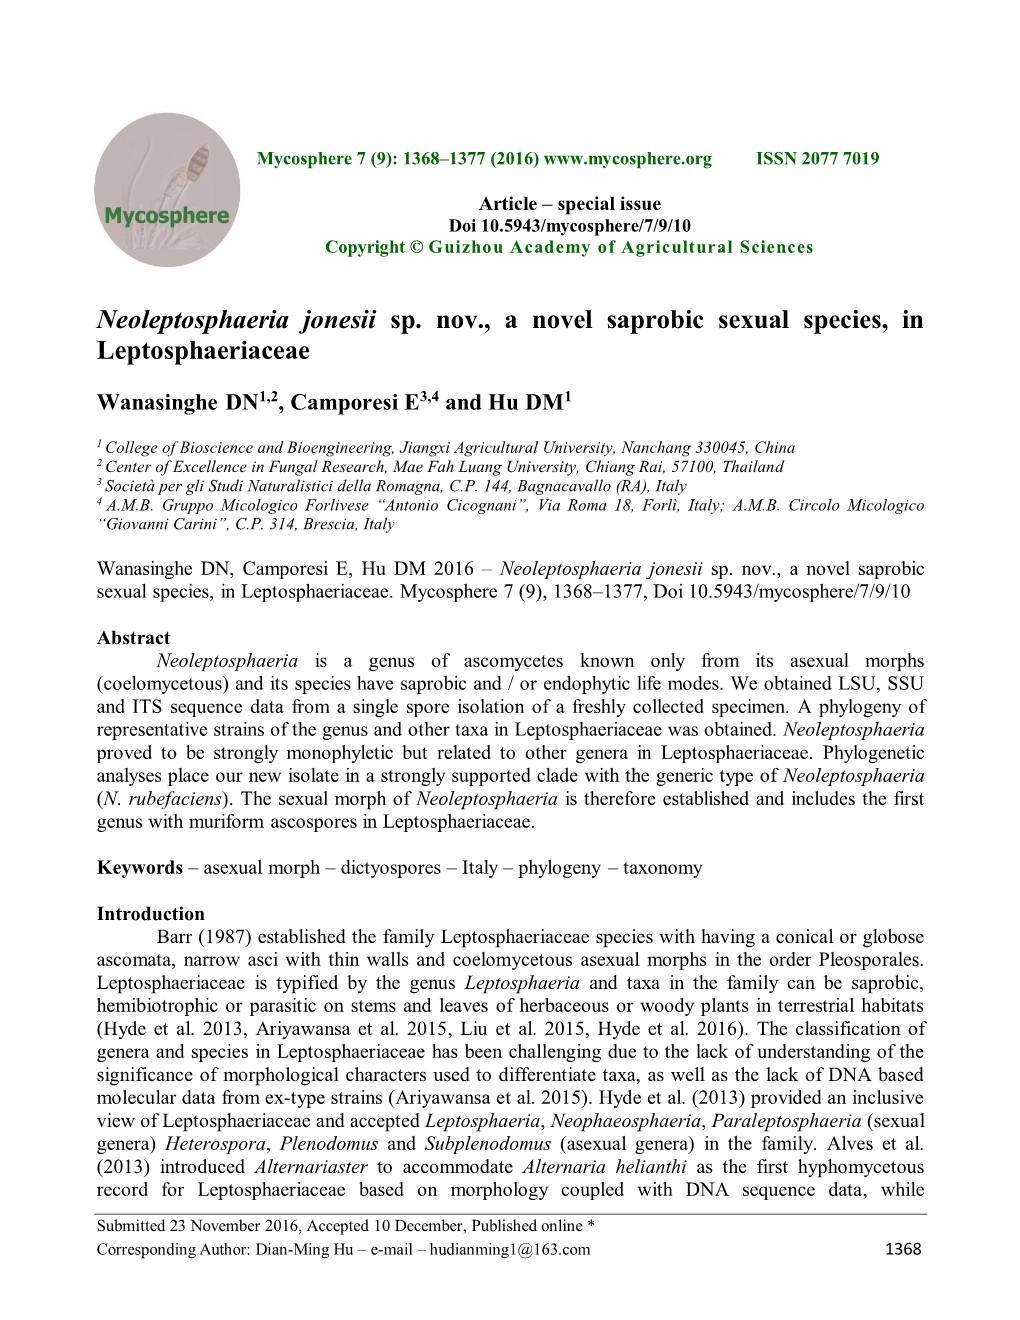 Neoleptosphaeria Jonesii Sp. Nov., a Novel Saprobic Sexual Species, in Leptosphaeriaceae